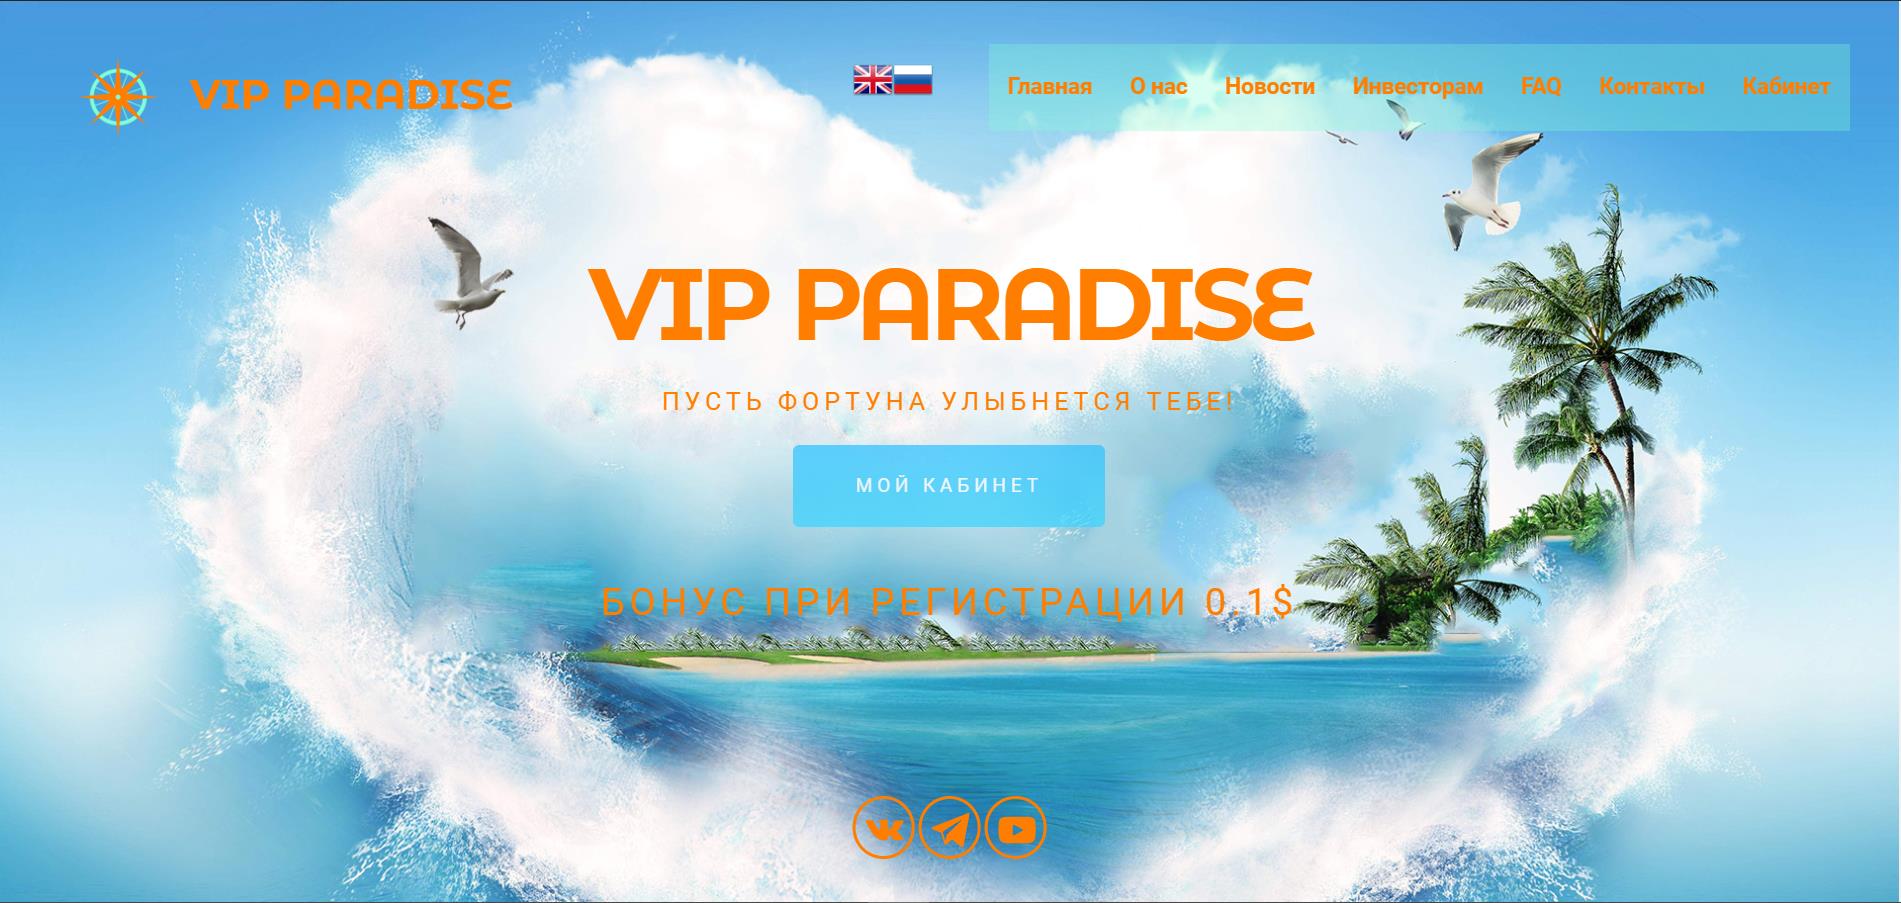 VIP PARADISE